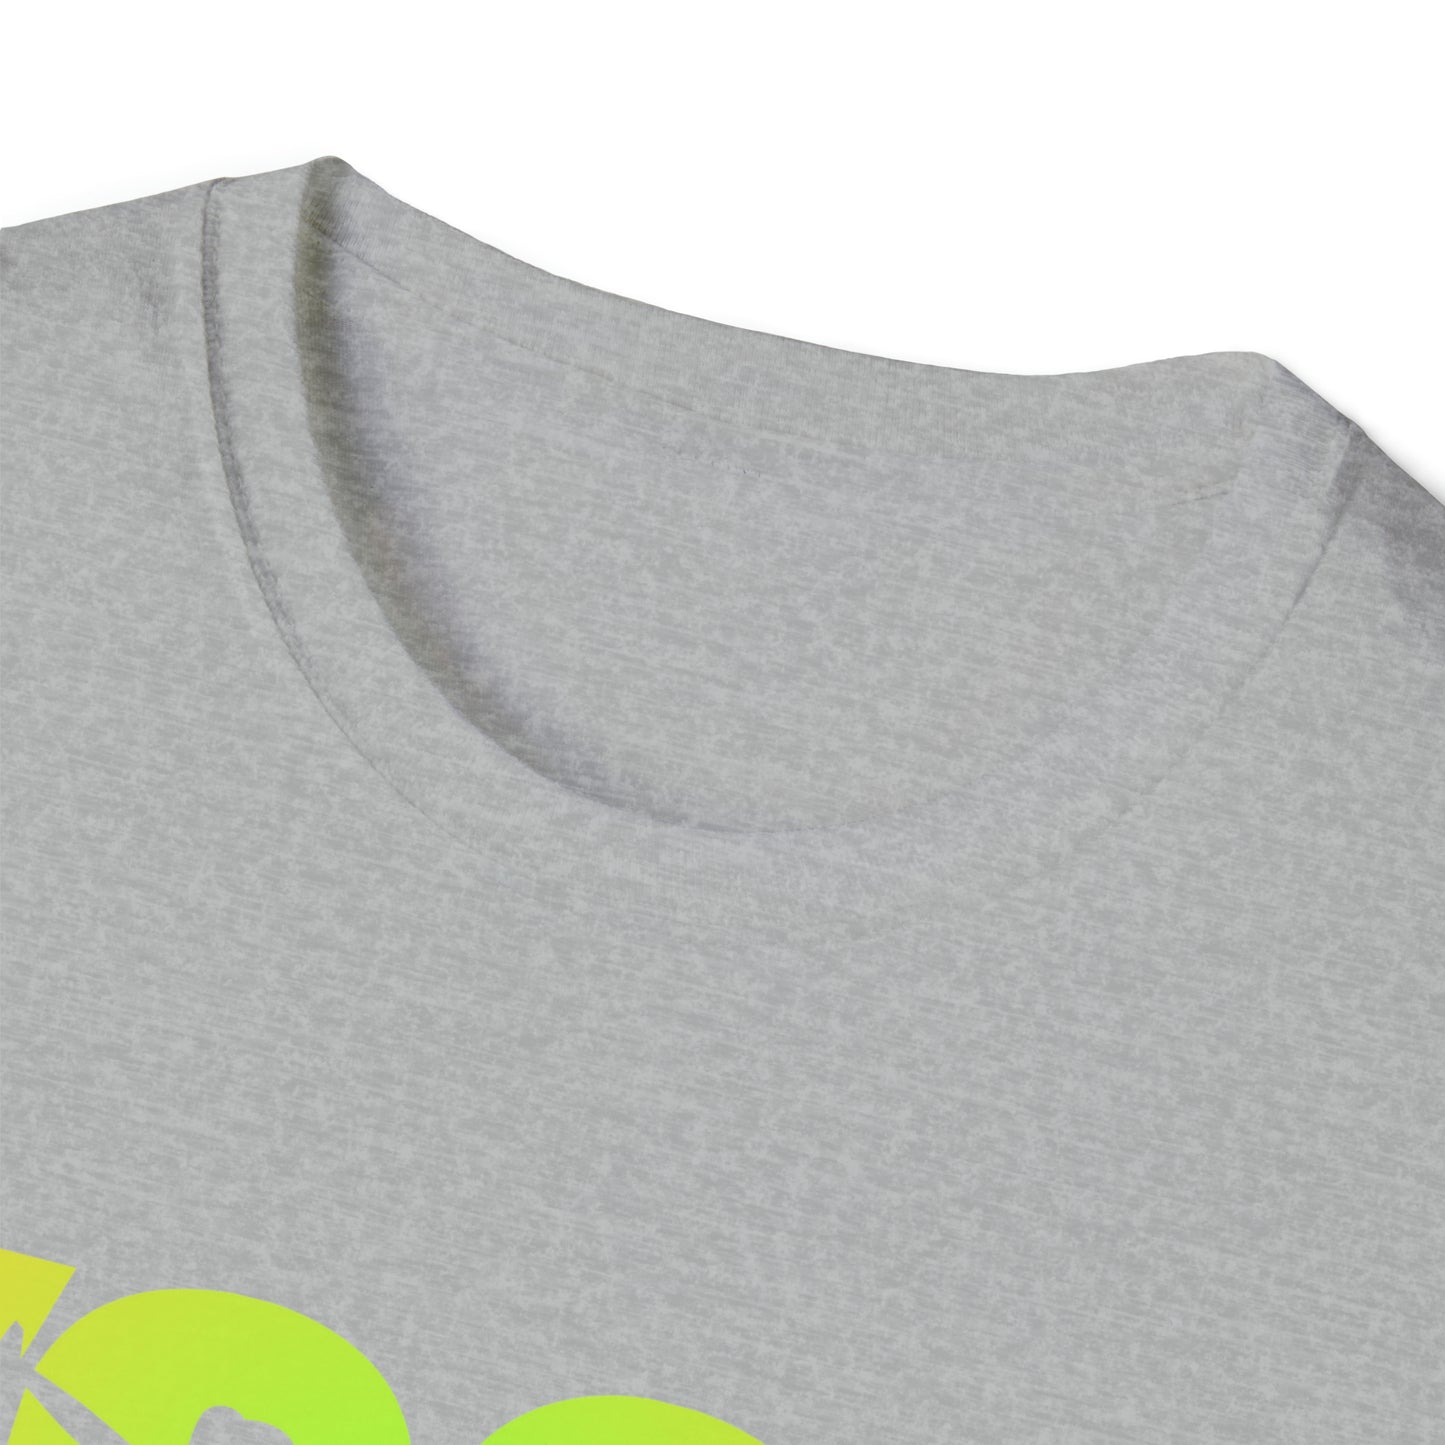 YOGA Graphic Tee Unisex Softstyle T-Shirt